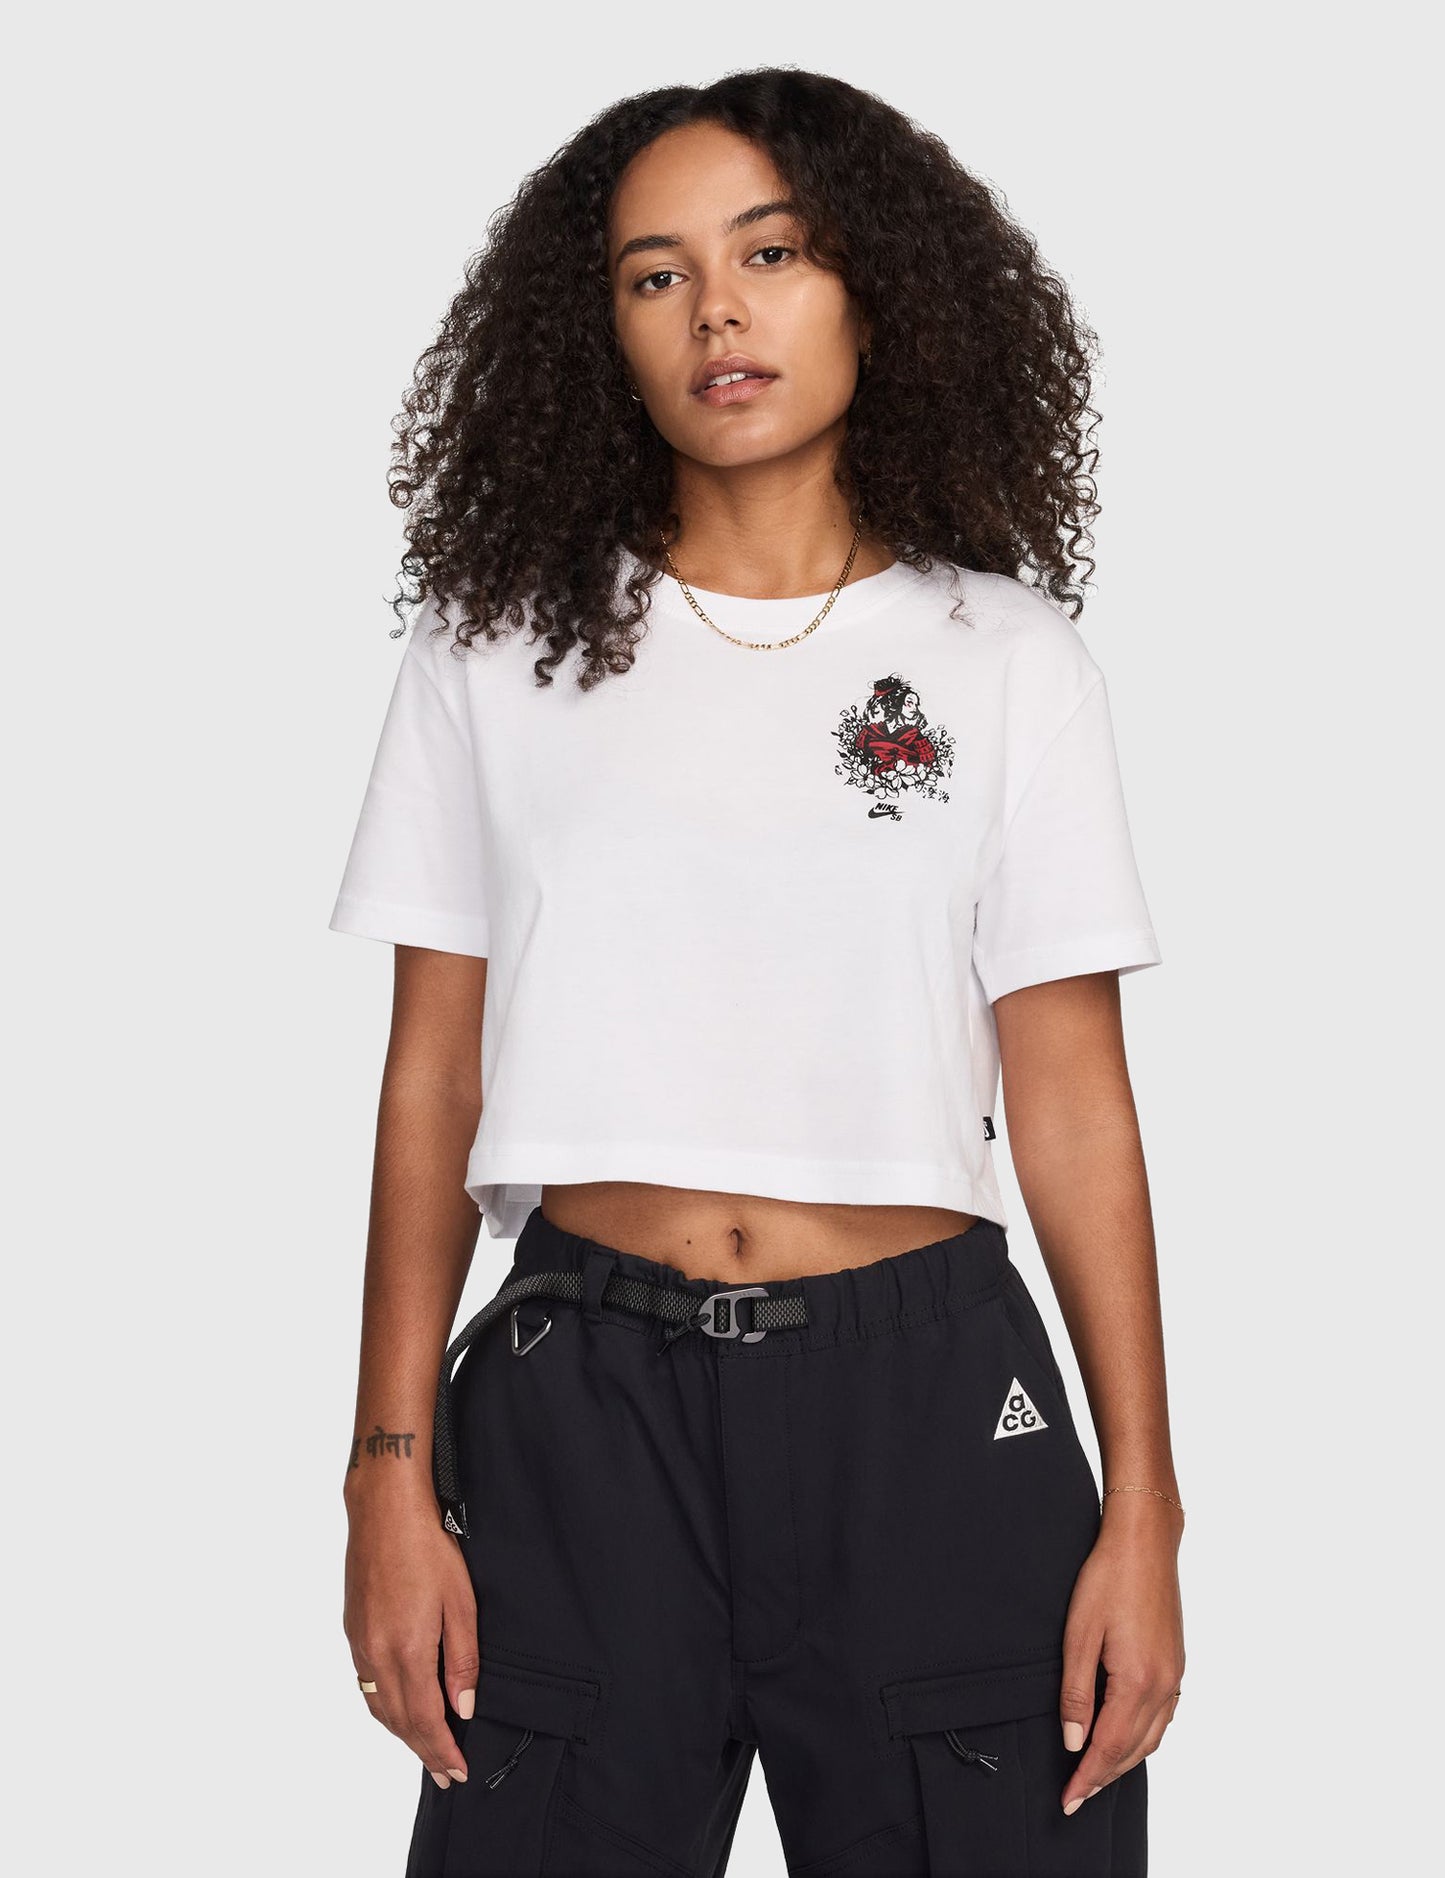 Sky Brown | Women's Cropped Skate T-Shirt